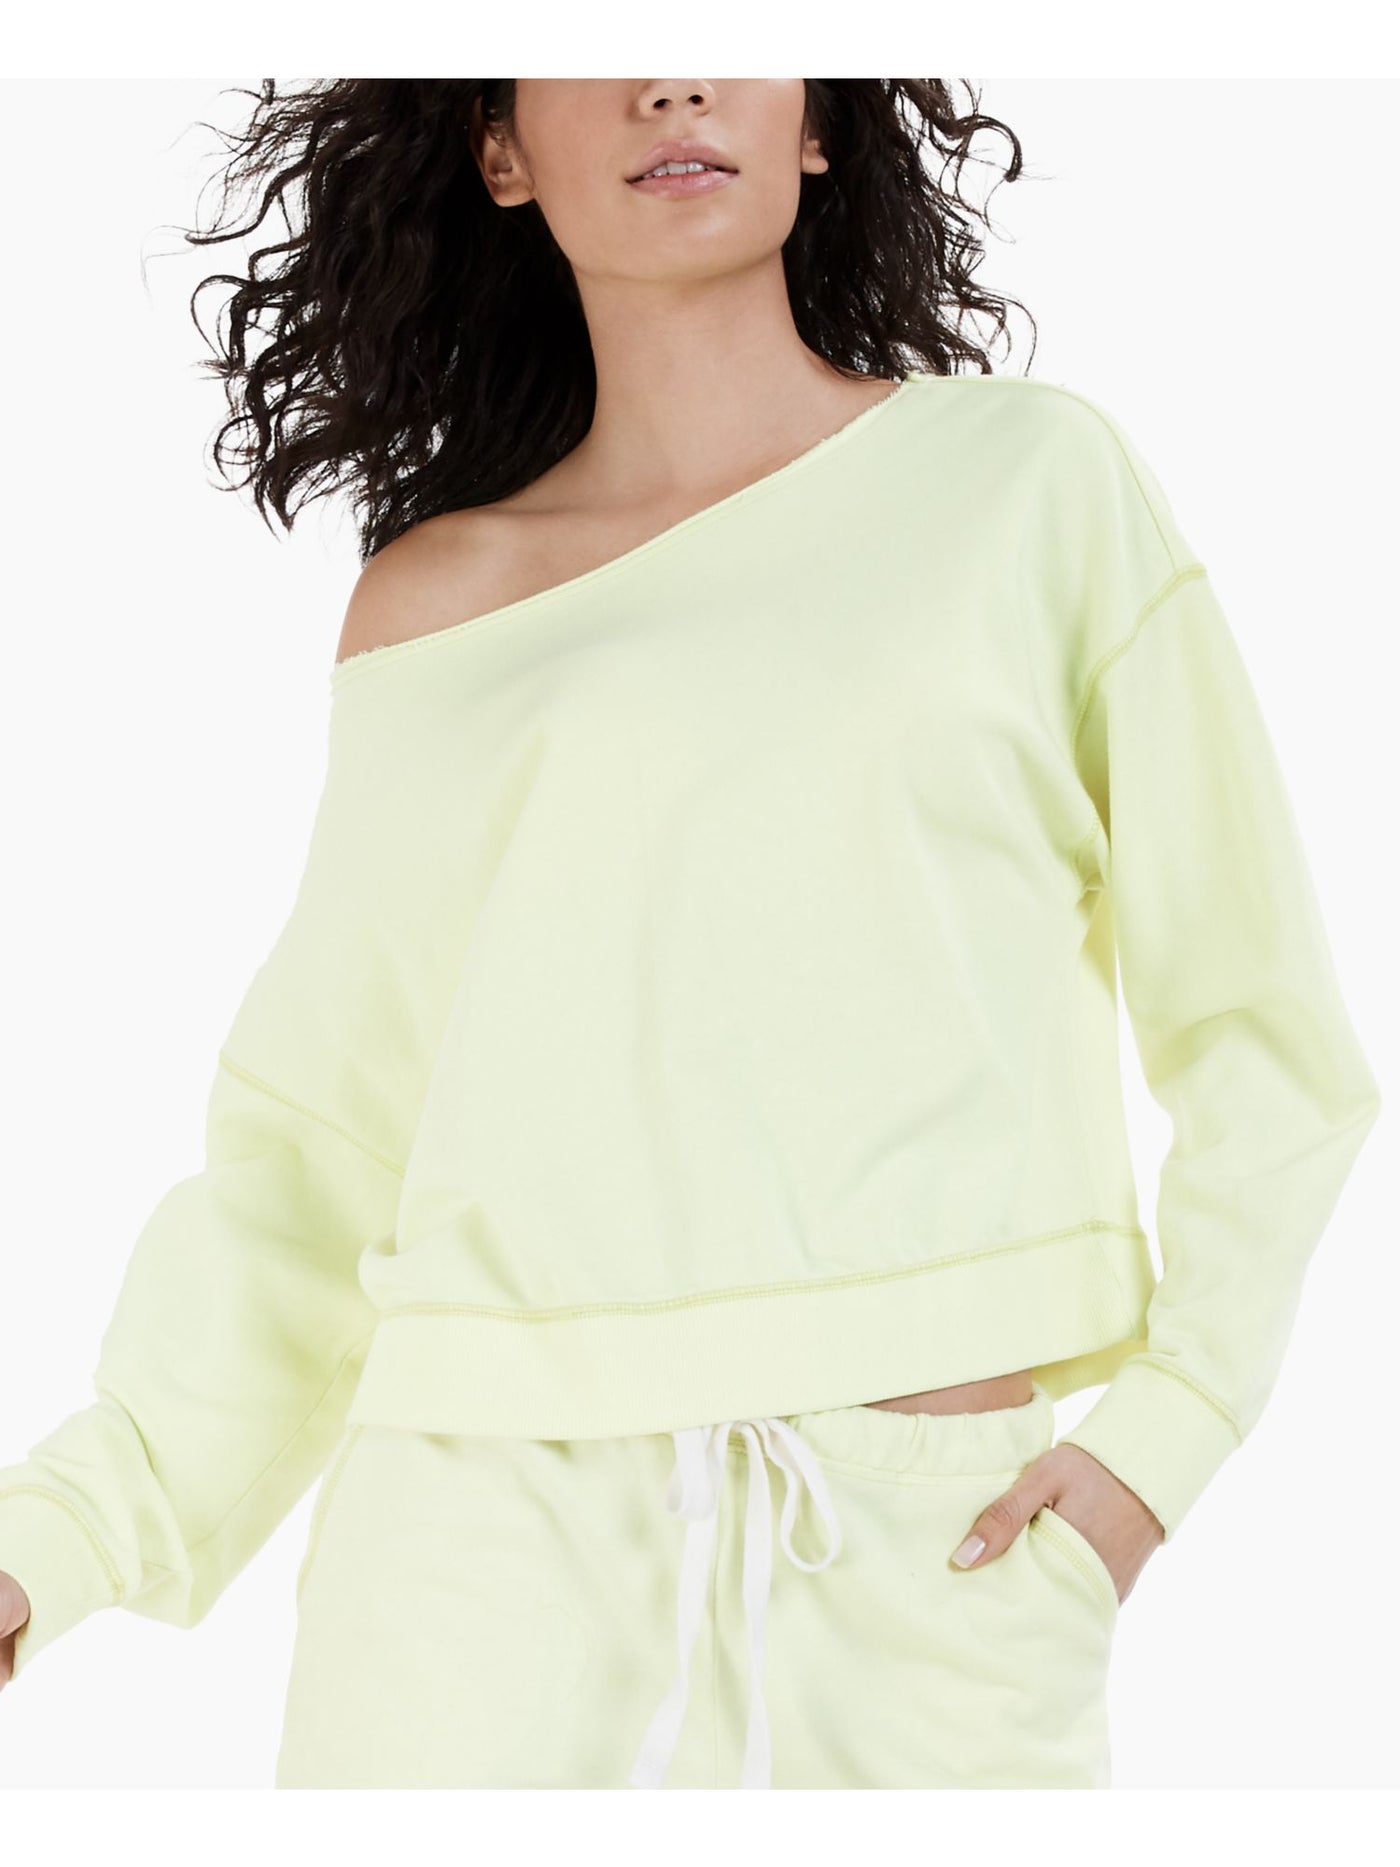 JENNI Intimates Yellow Ribbed Sleepwear Sleep Shirt Pajama Top XL